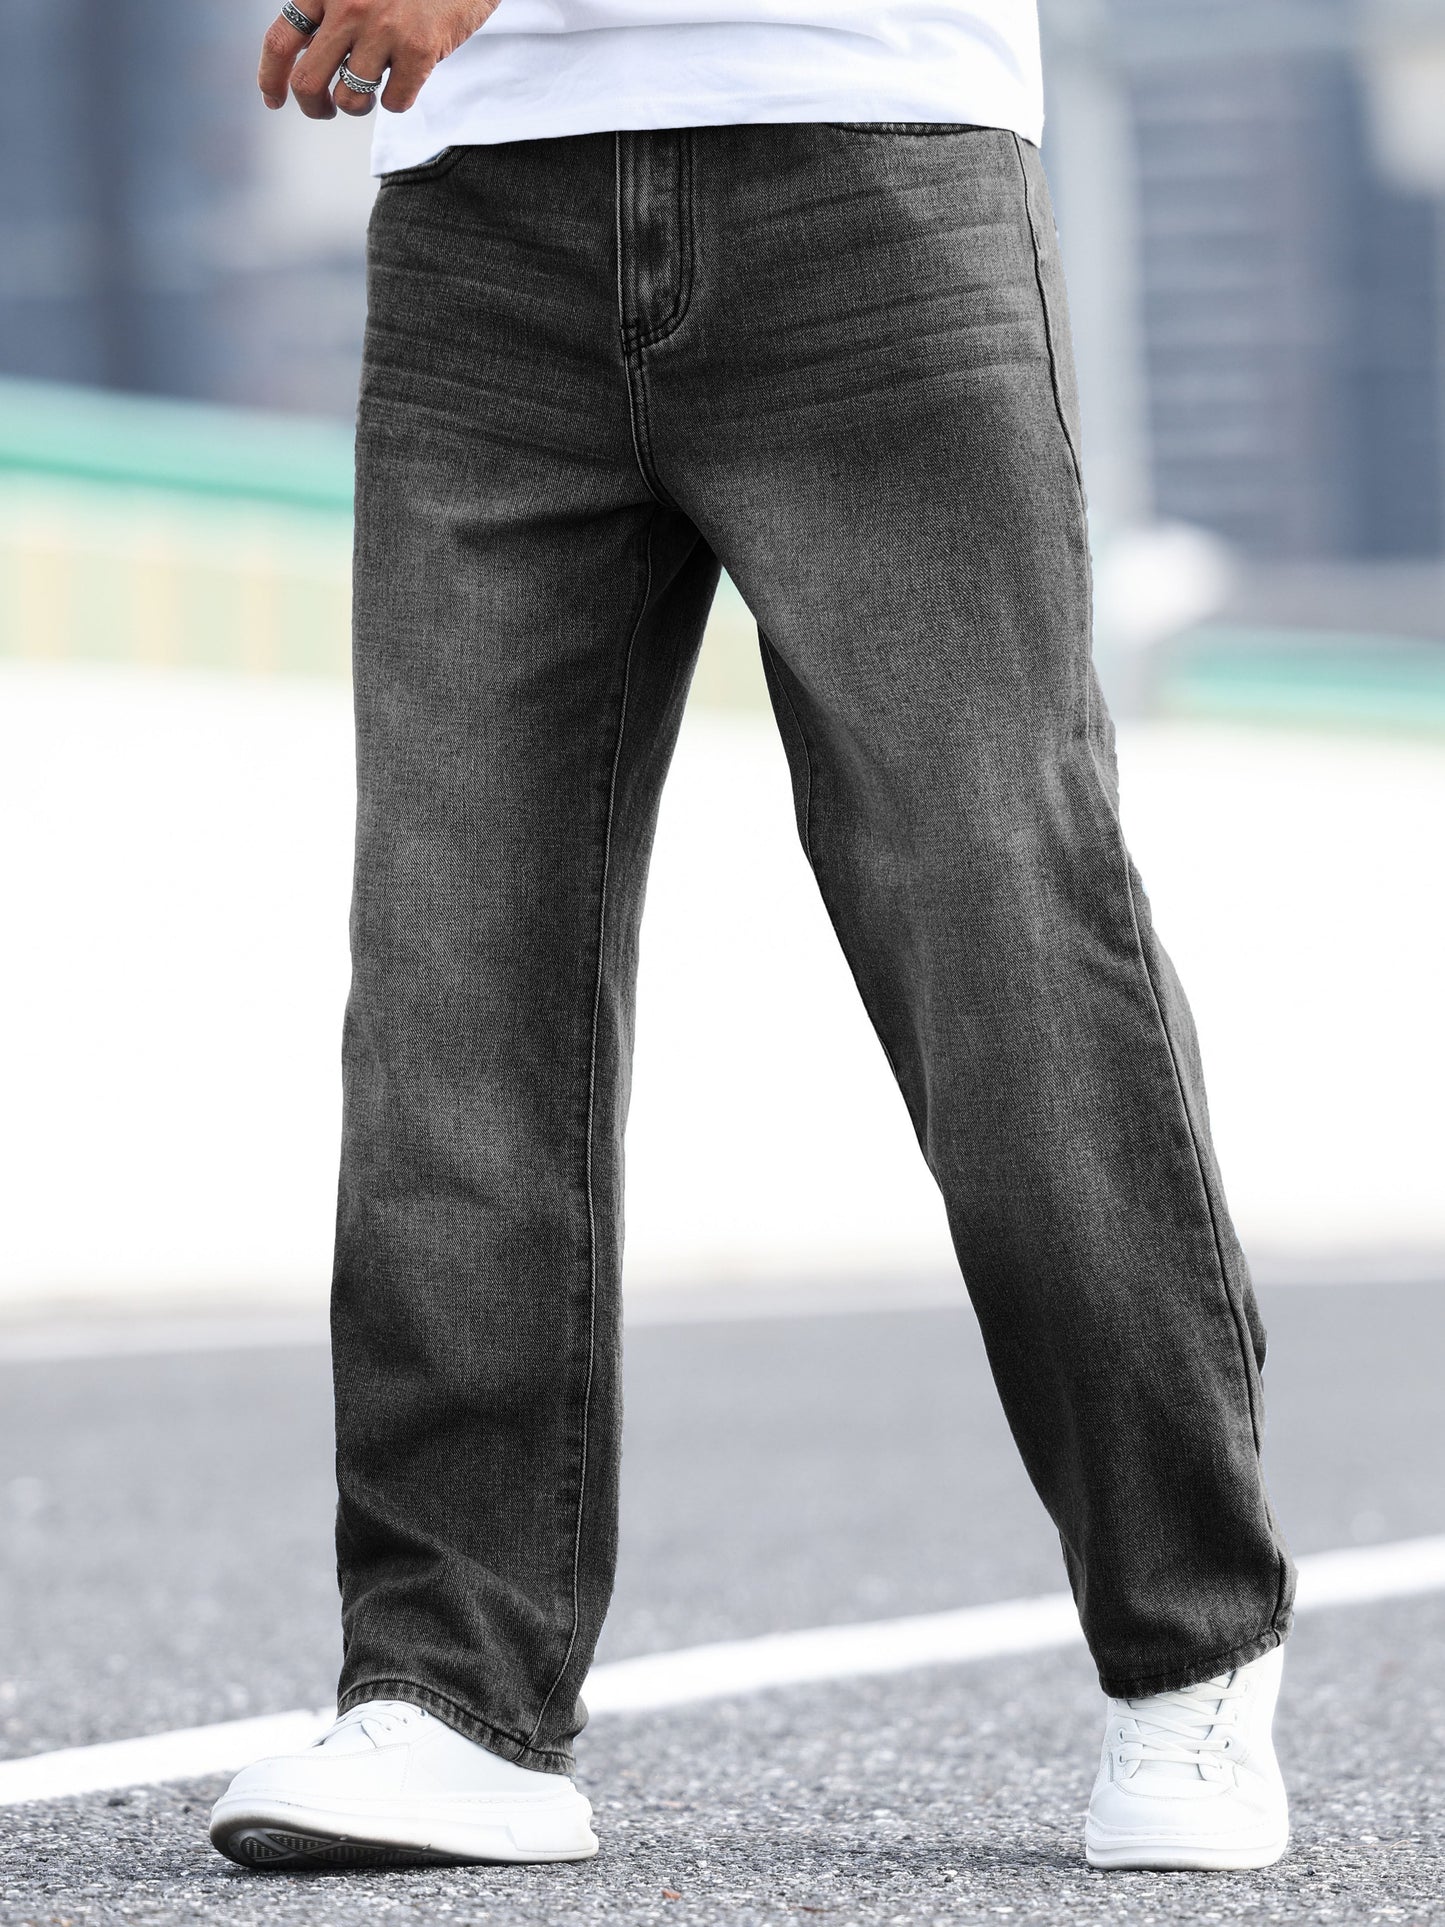 Classic Design Distressed Jeans, Men's Casual Drawstring Regular Fit Denim Pants For All Seasons